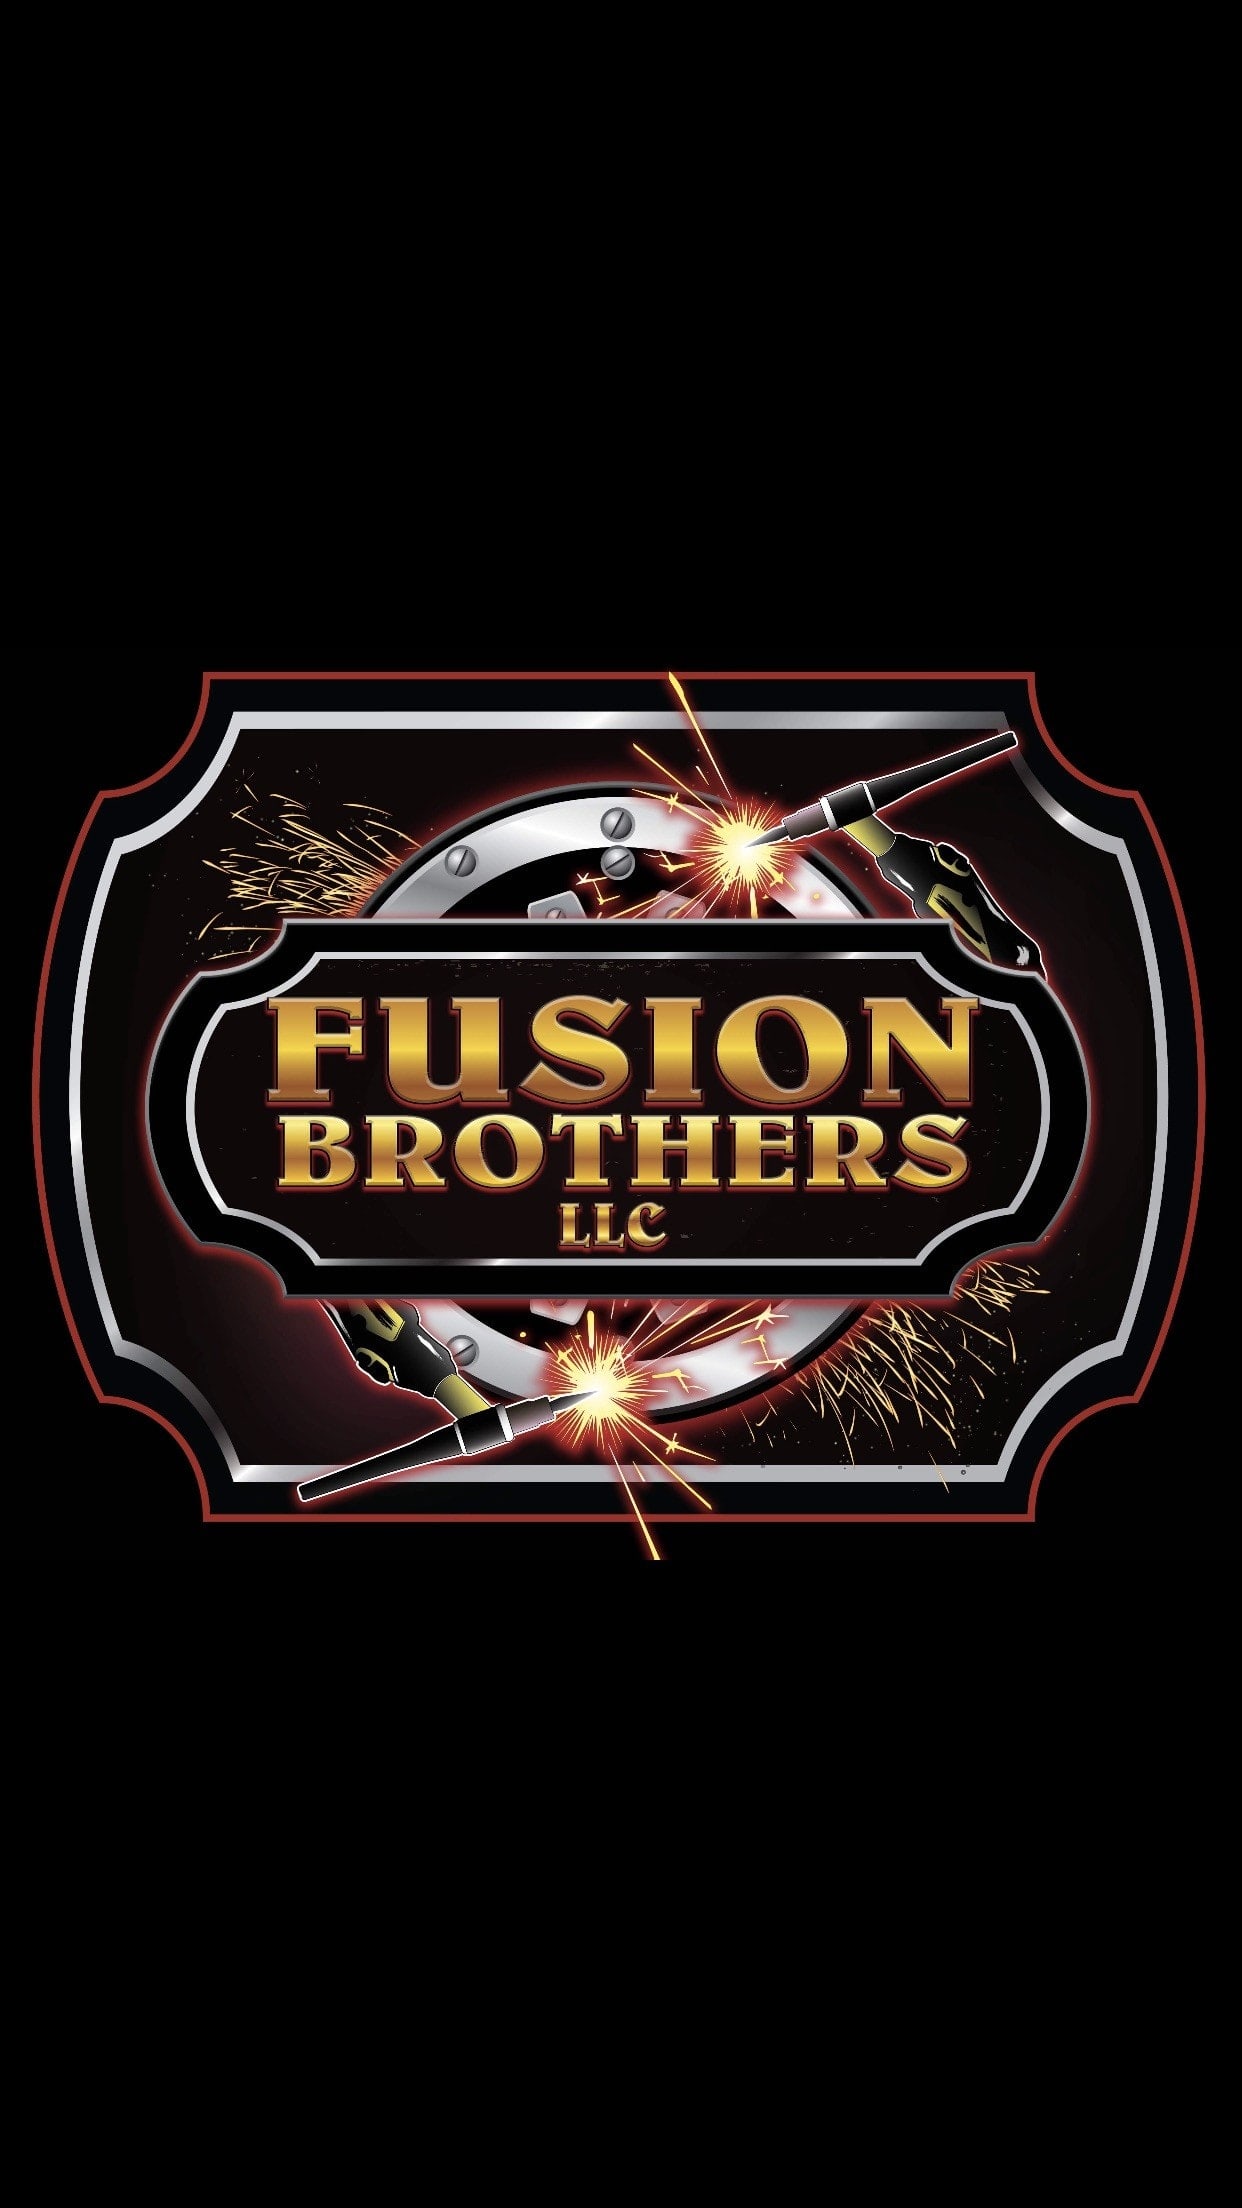 Fusion Brothers LLC